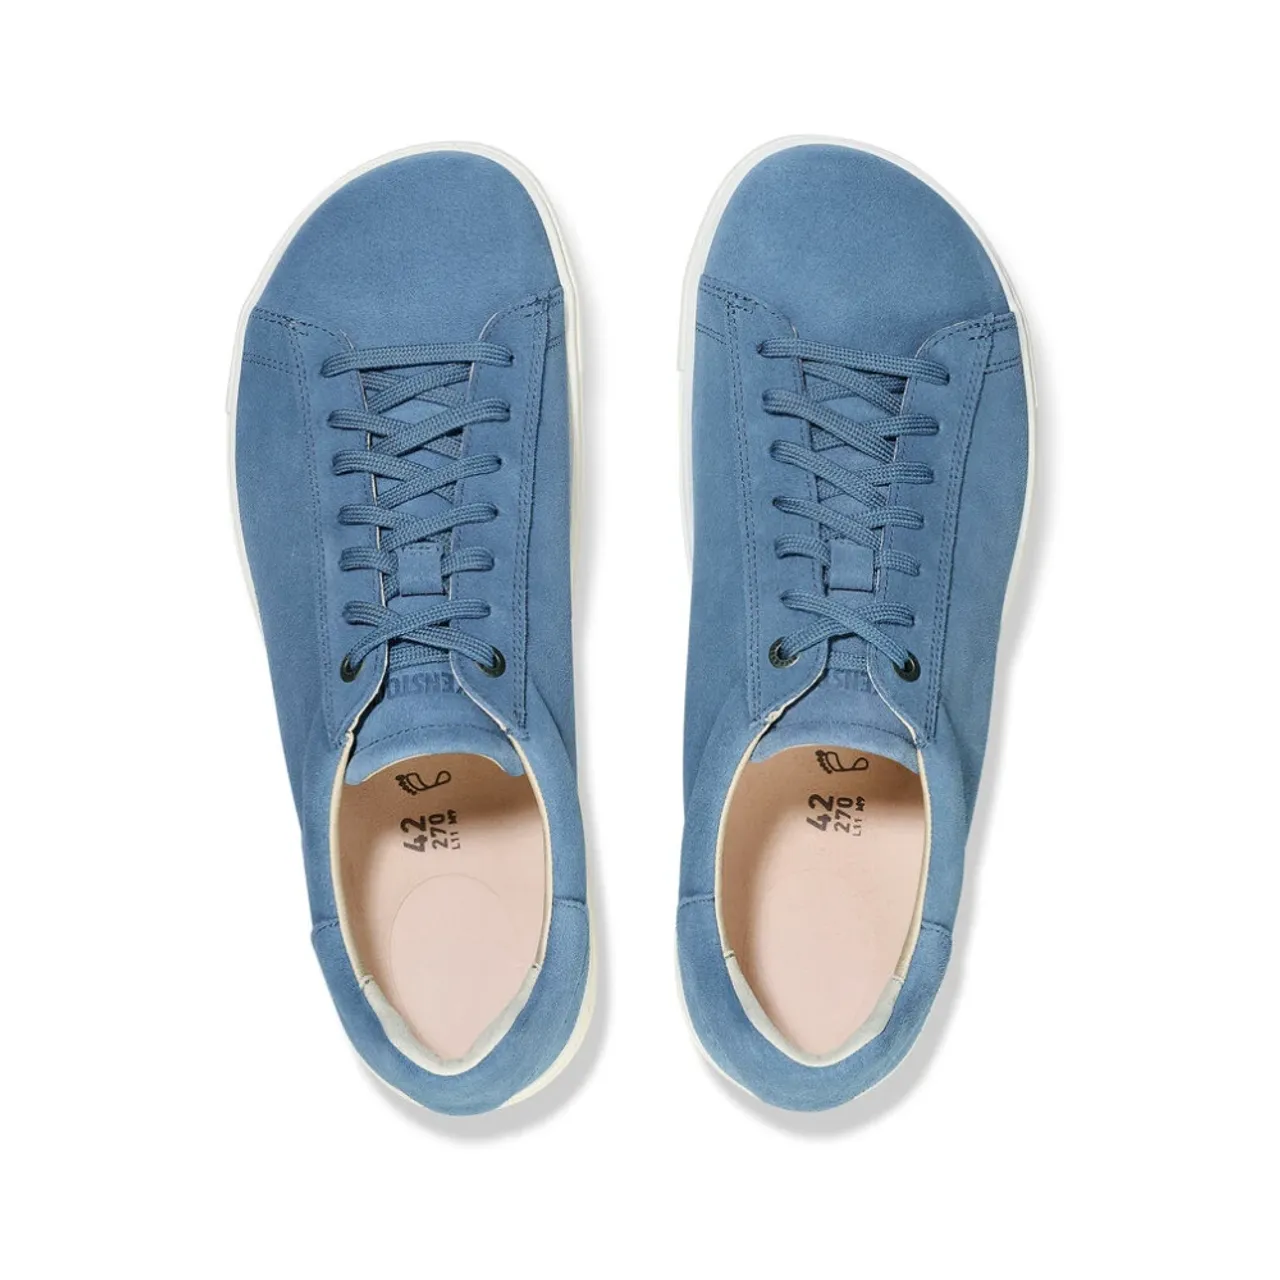 Blaue Wildleder-Sneakers mit herausnehmbarem Fußbett Birkenstock